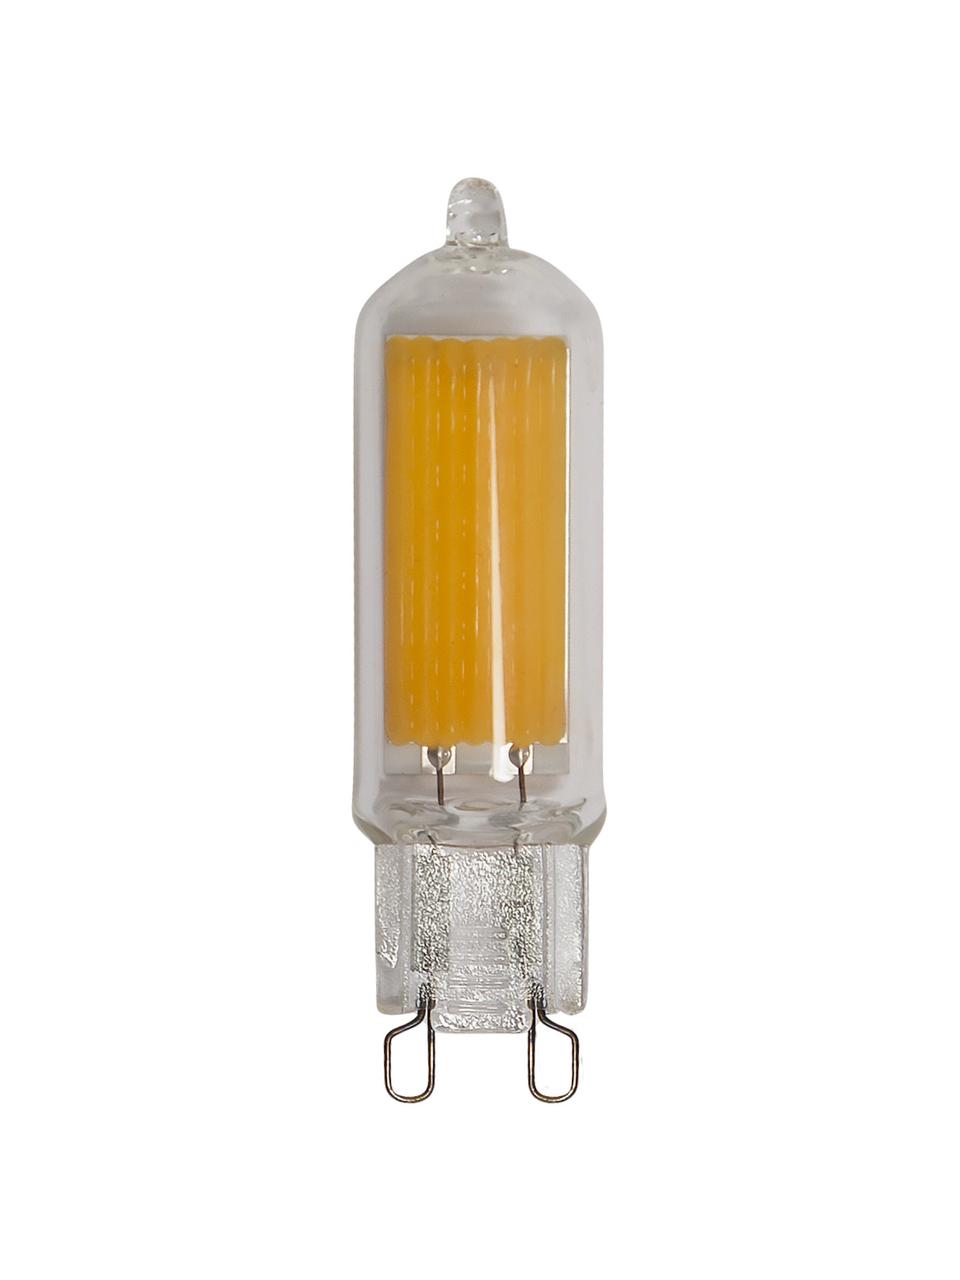 G9 Leuchtmittel, 3W, warmweiss, 4 Stück, Leuchtmittelschirm: Glas, Leuchtmittelfassung: Aluminium, Transparent, Ø 1 x H 6 cm